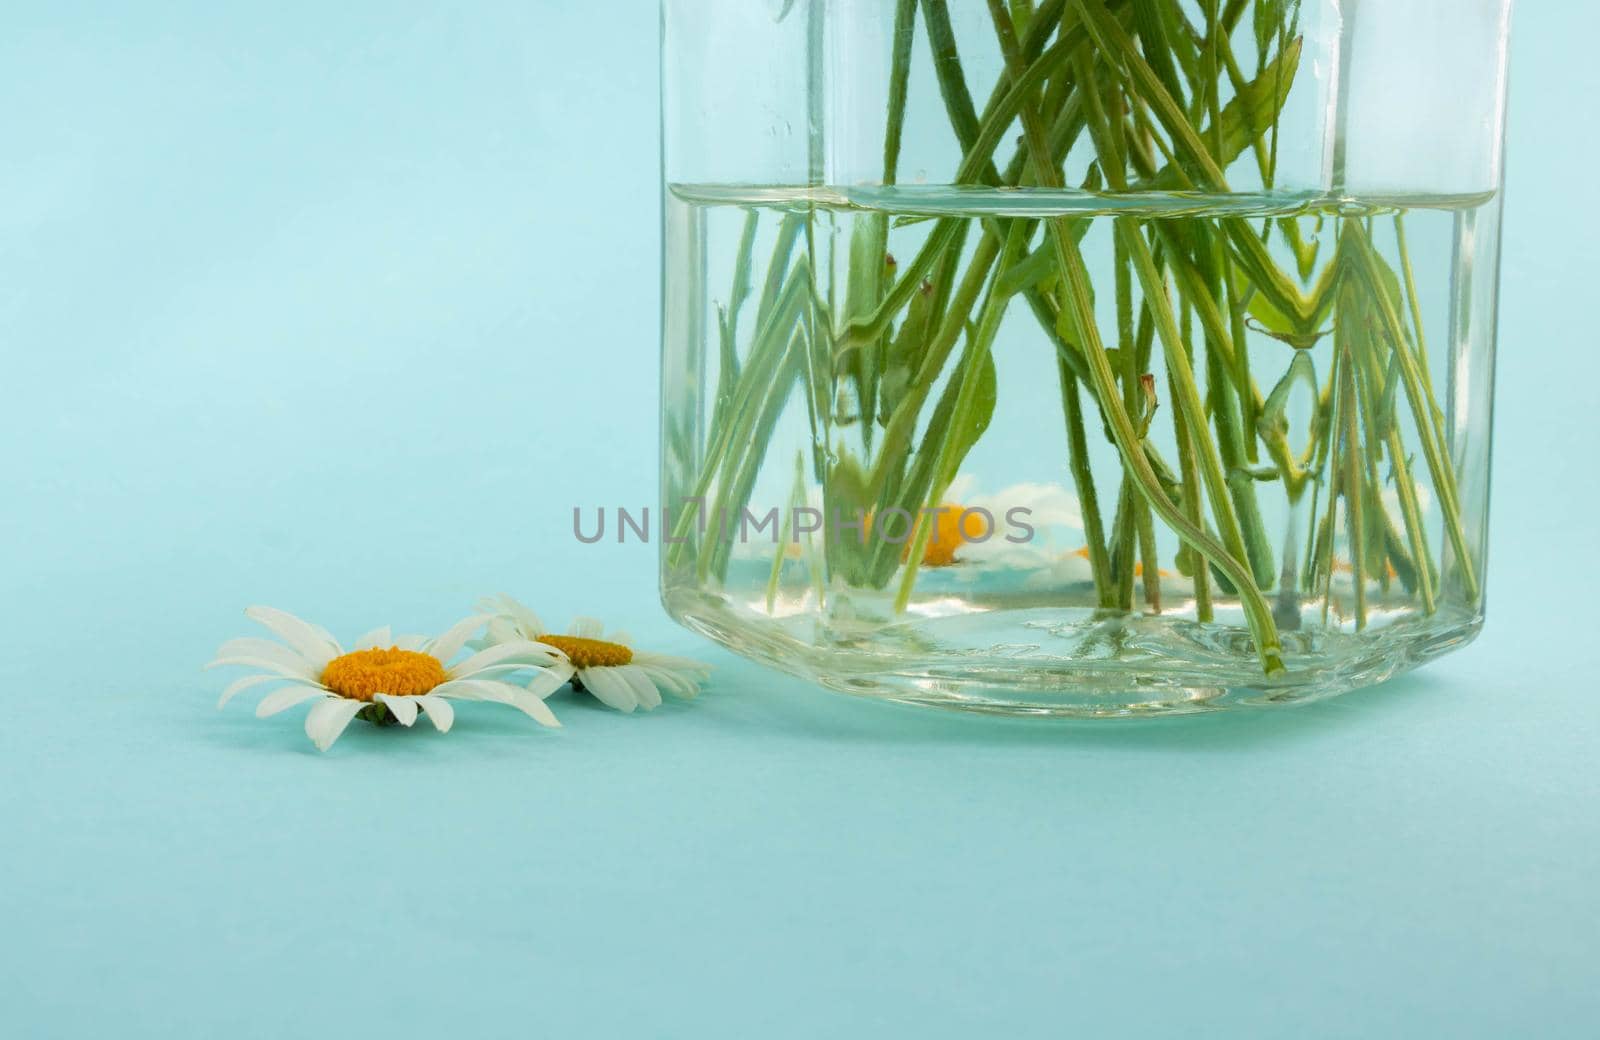 Chamomile flowers near a glass jar on a blue background by lapushka62